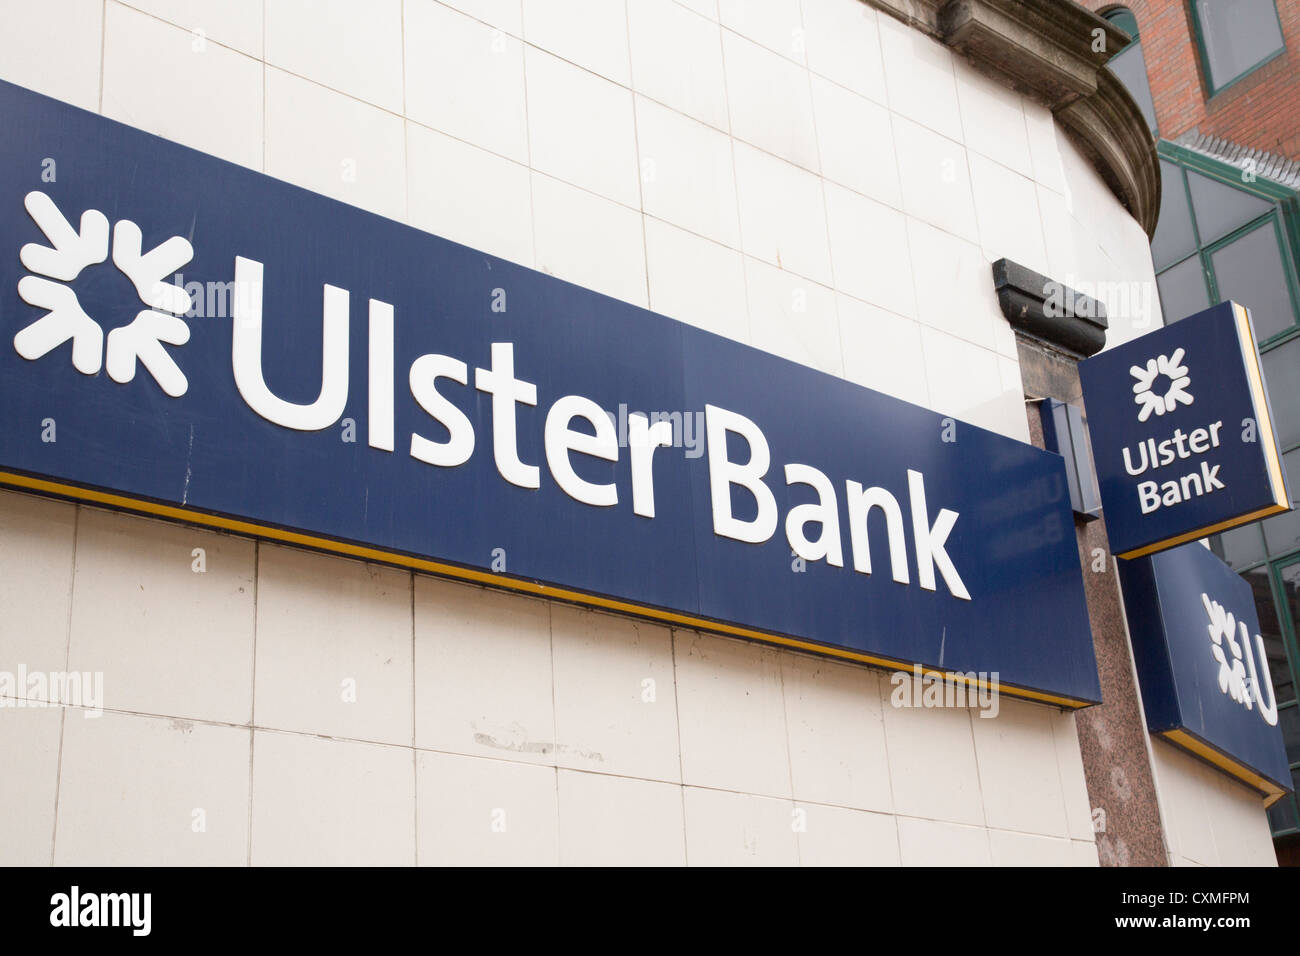 Ulster Bank signe avec logo RBS dans le centre-ville de Belfast, County Antrim, Northern Ireland, UK Banque D'Images